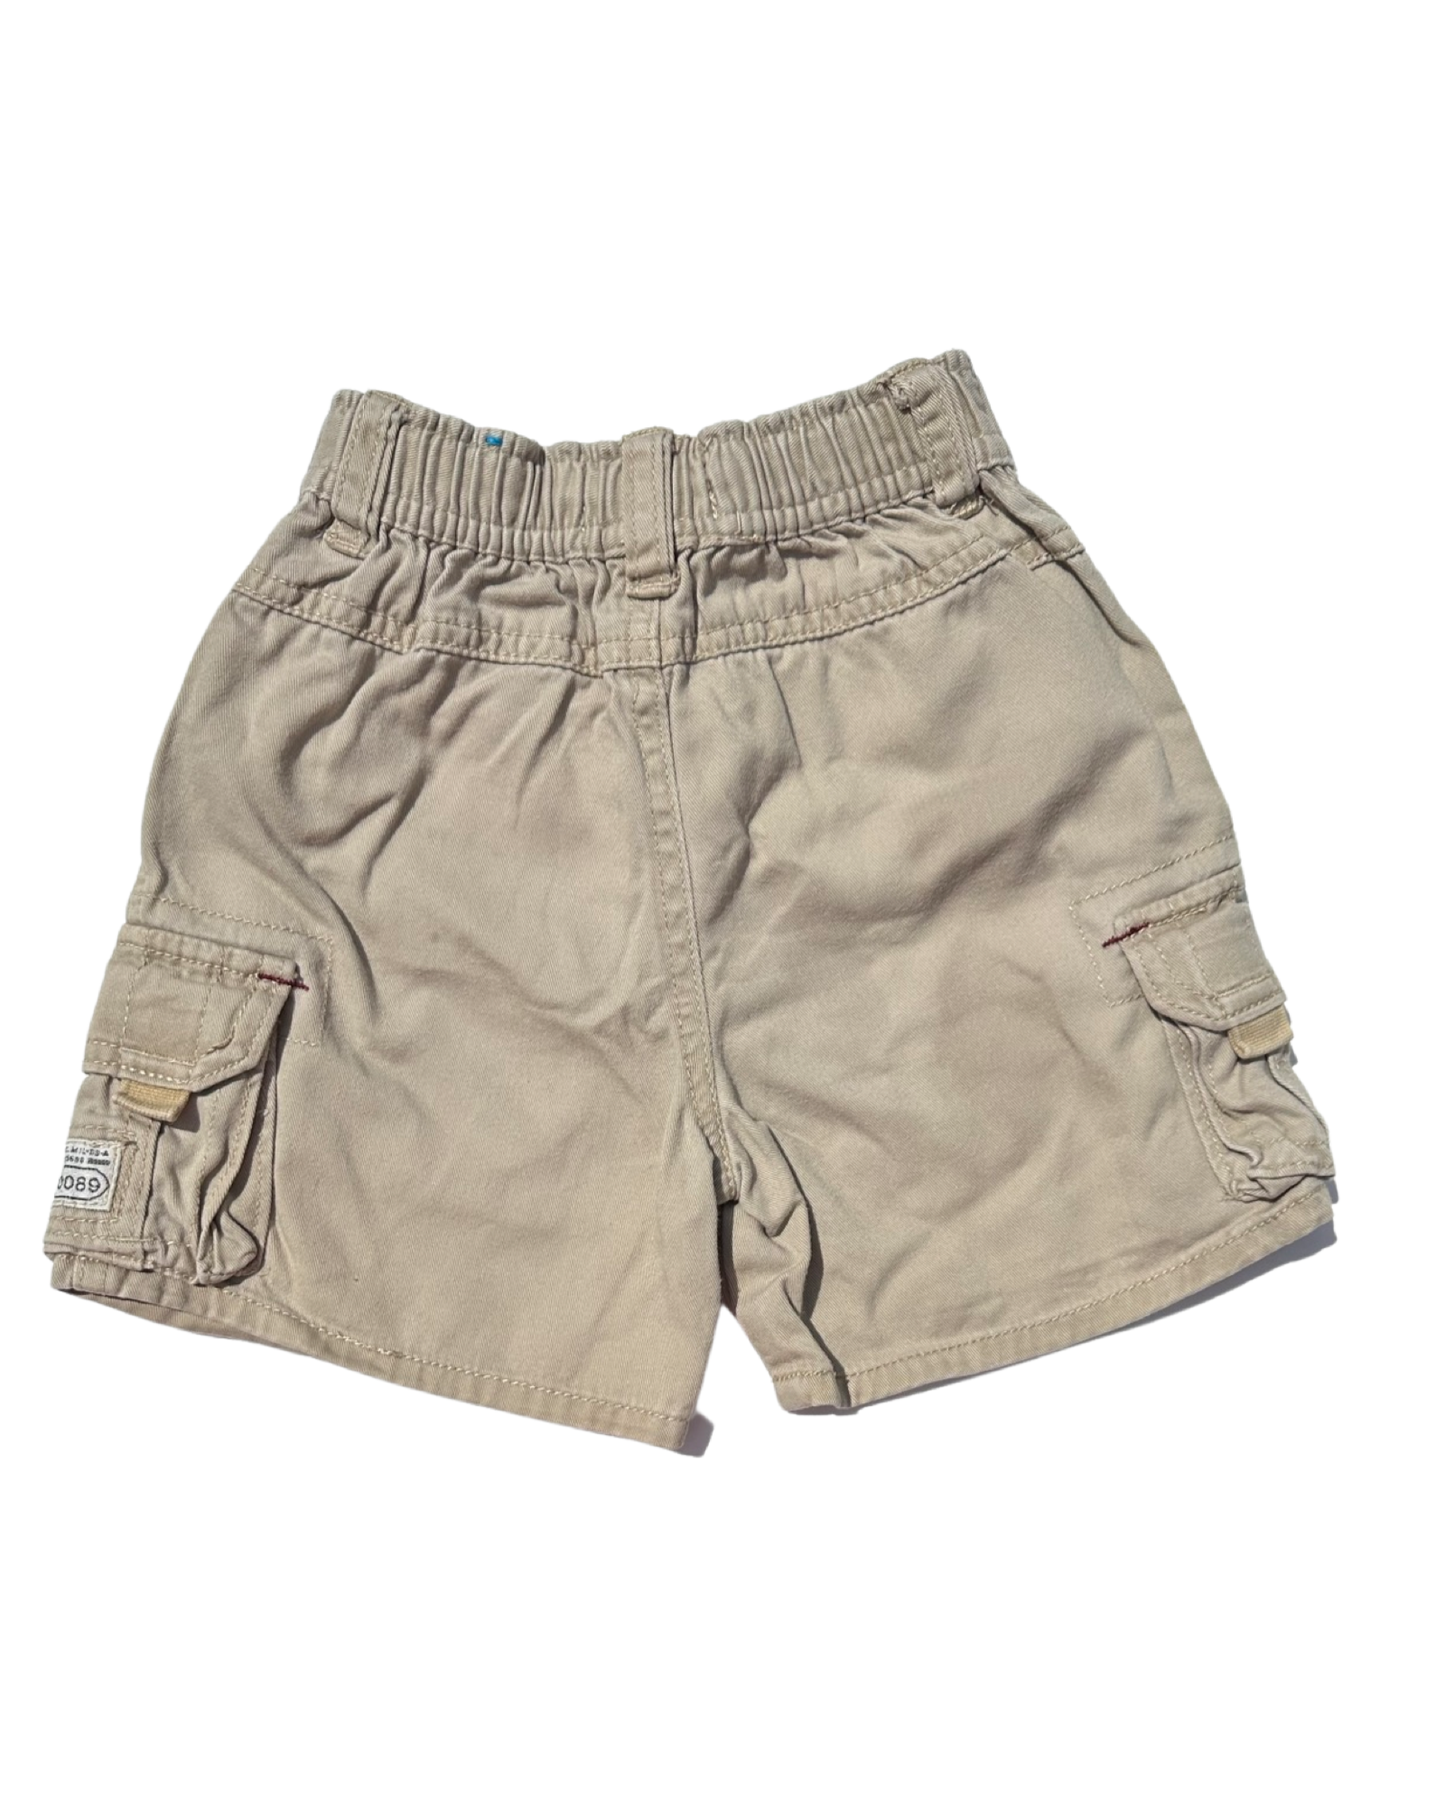 The Children's Place vintage beige cargo shorts (size 12-18mths)